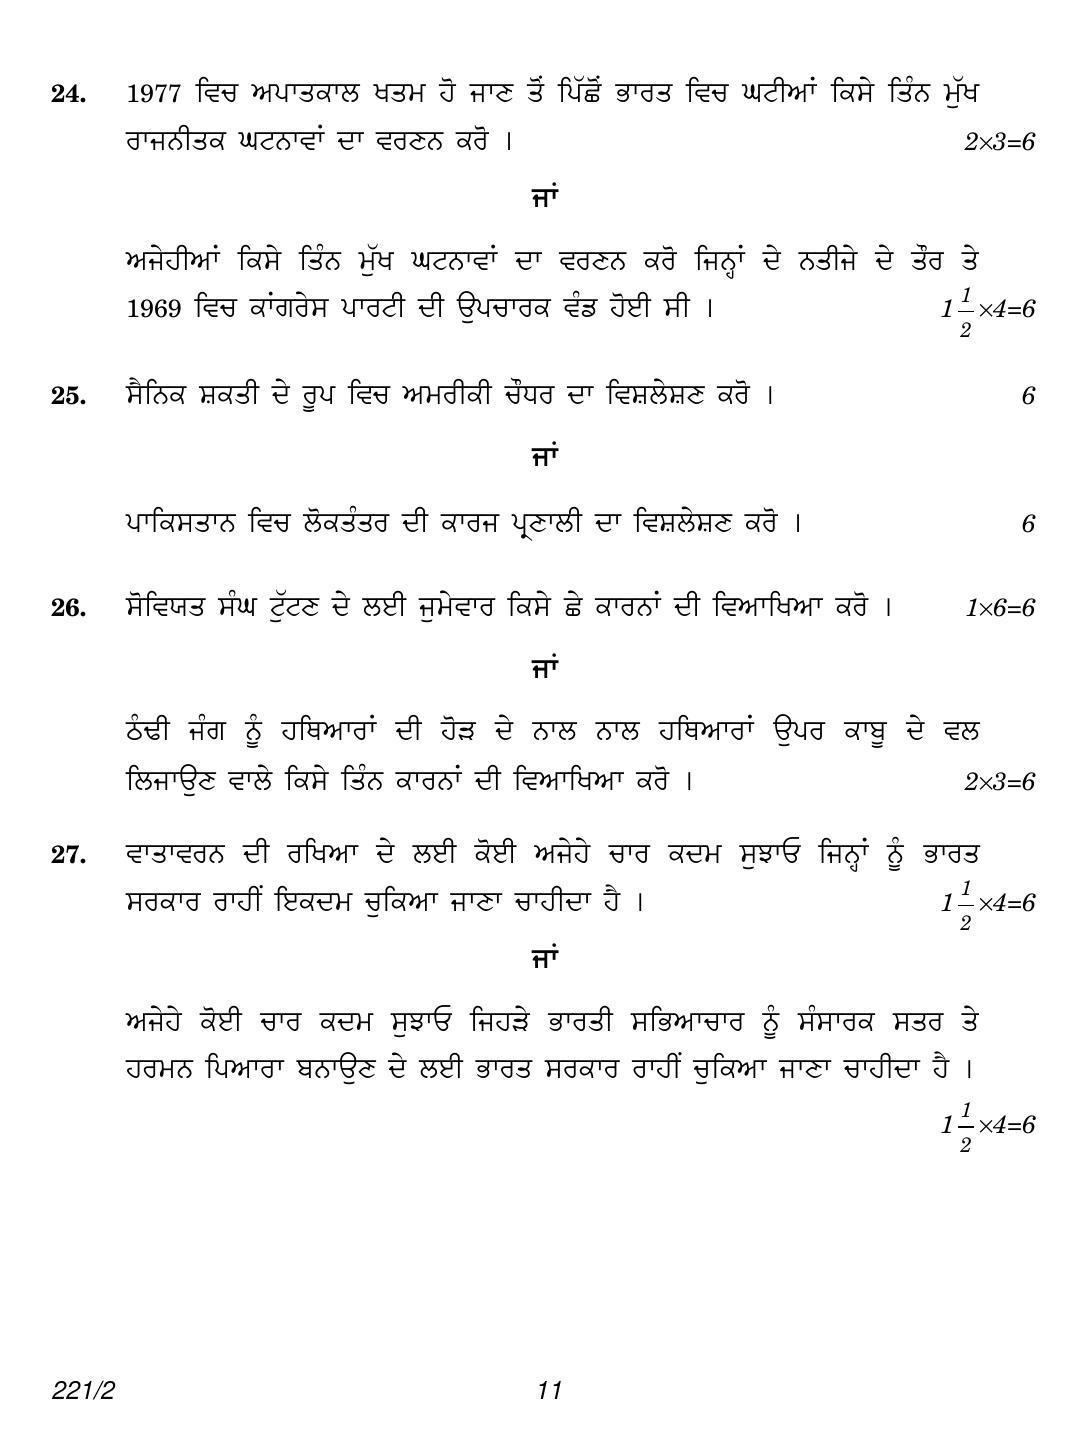 CBSE Class 12 221-2 (Political Science Punjabi) 2018 Question Paper - Page 11